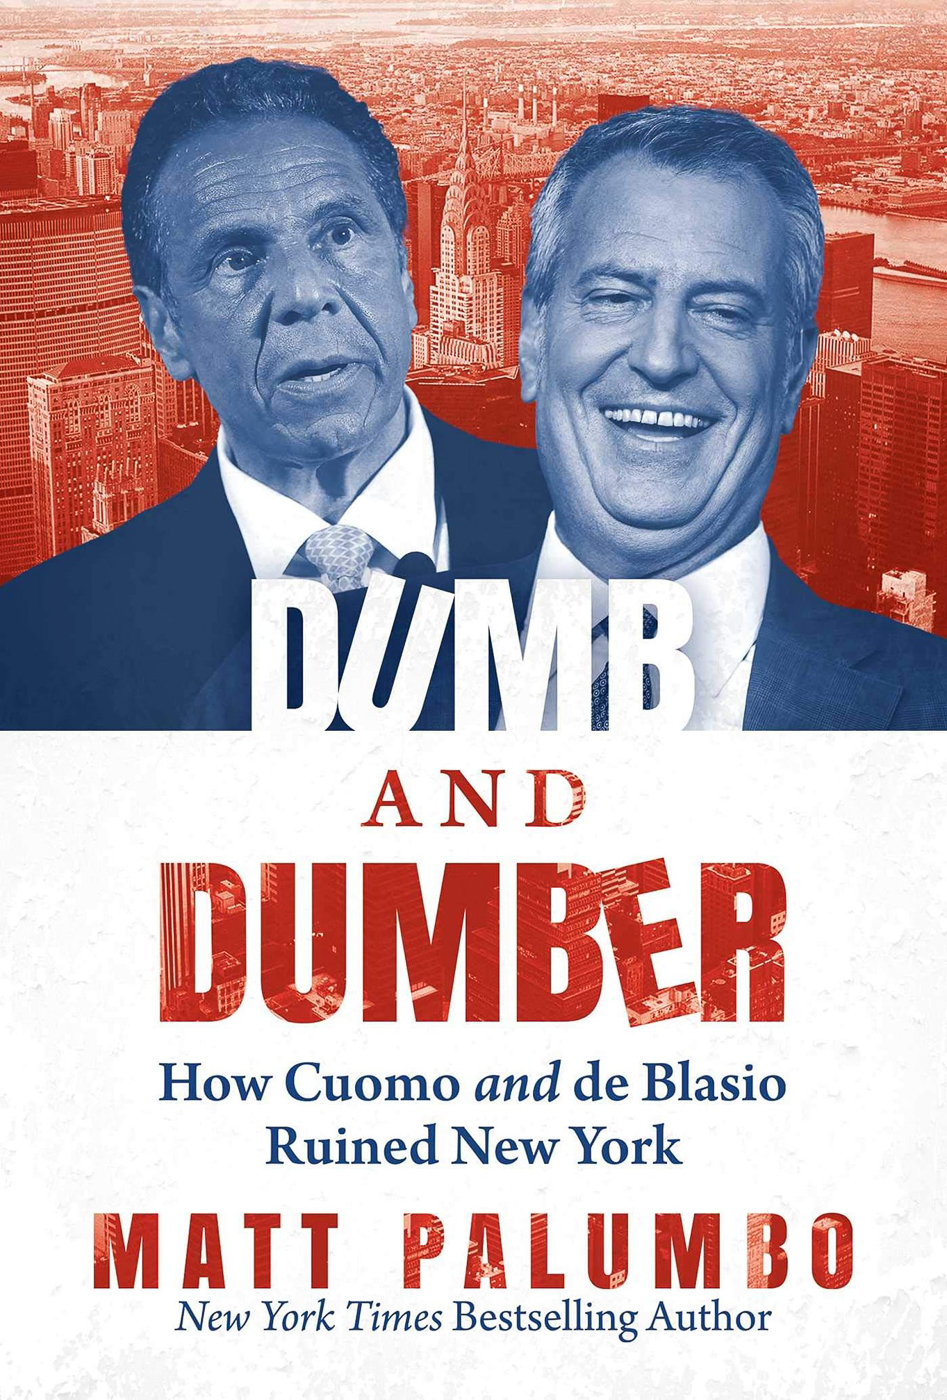 Dumb and Dumber - Deblasio and Cuomo  ~~  